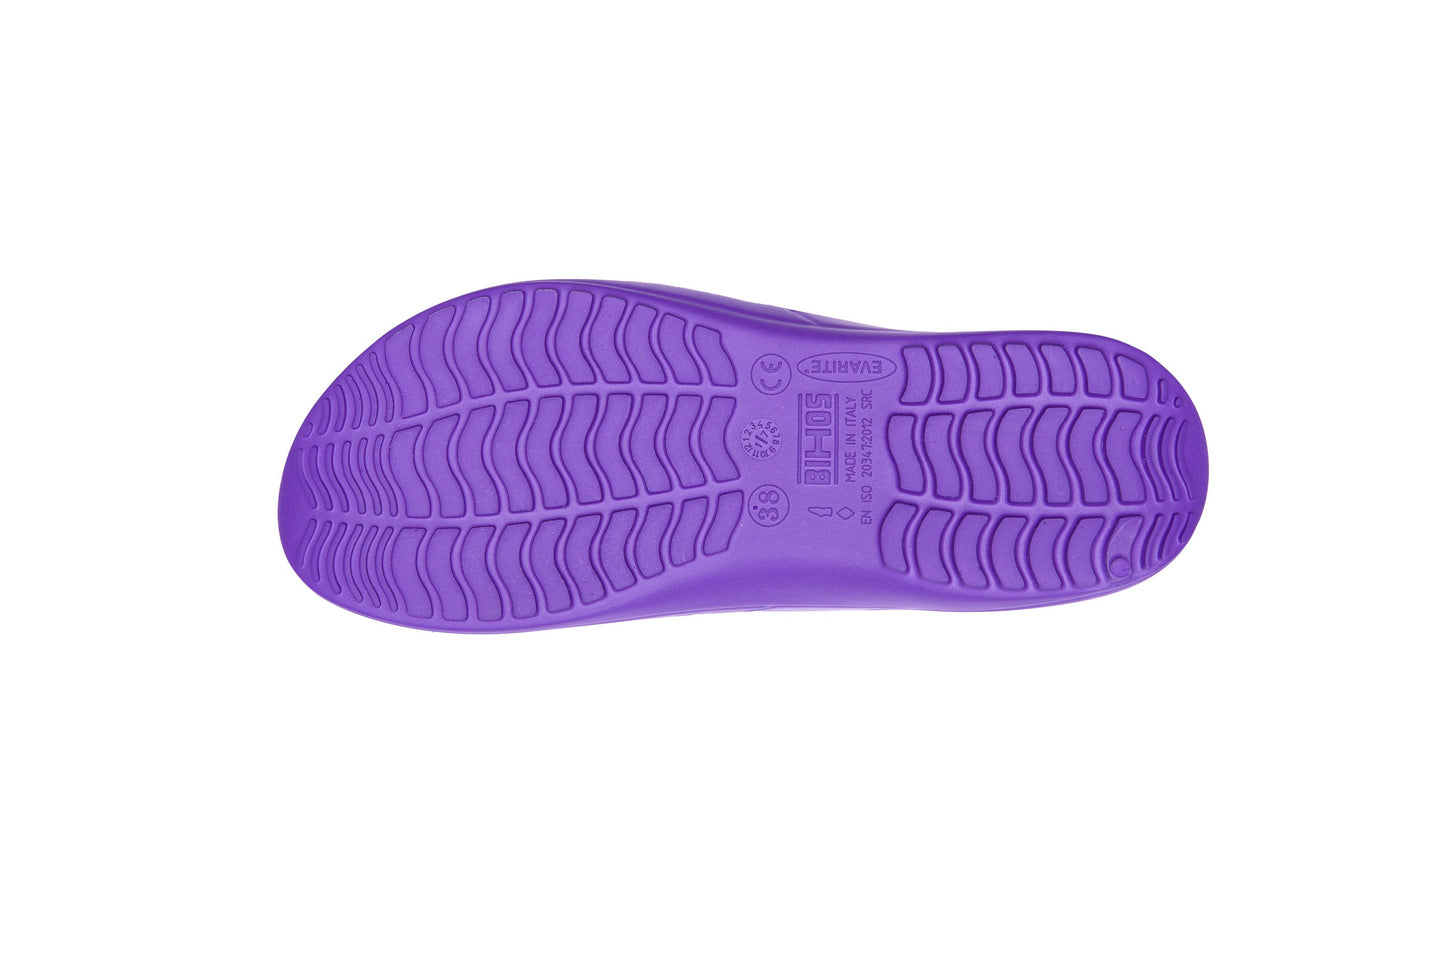 Calzuro Aqua Purple Flip Flops